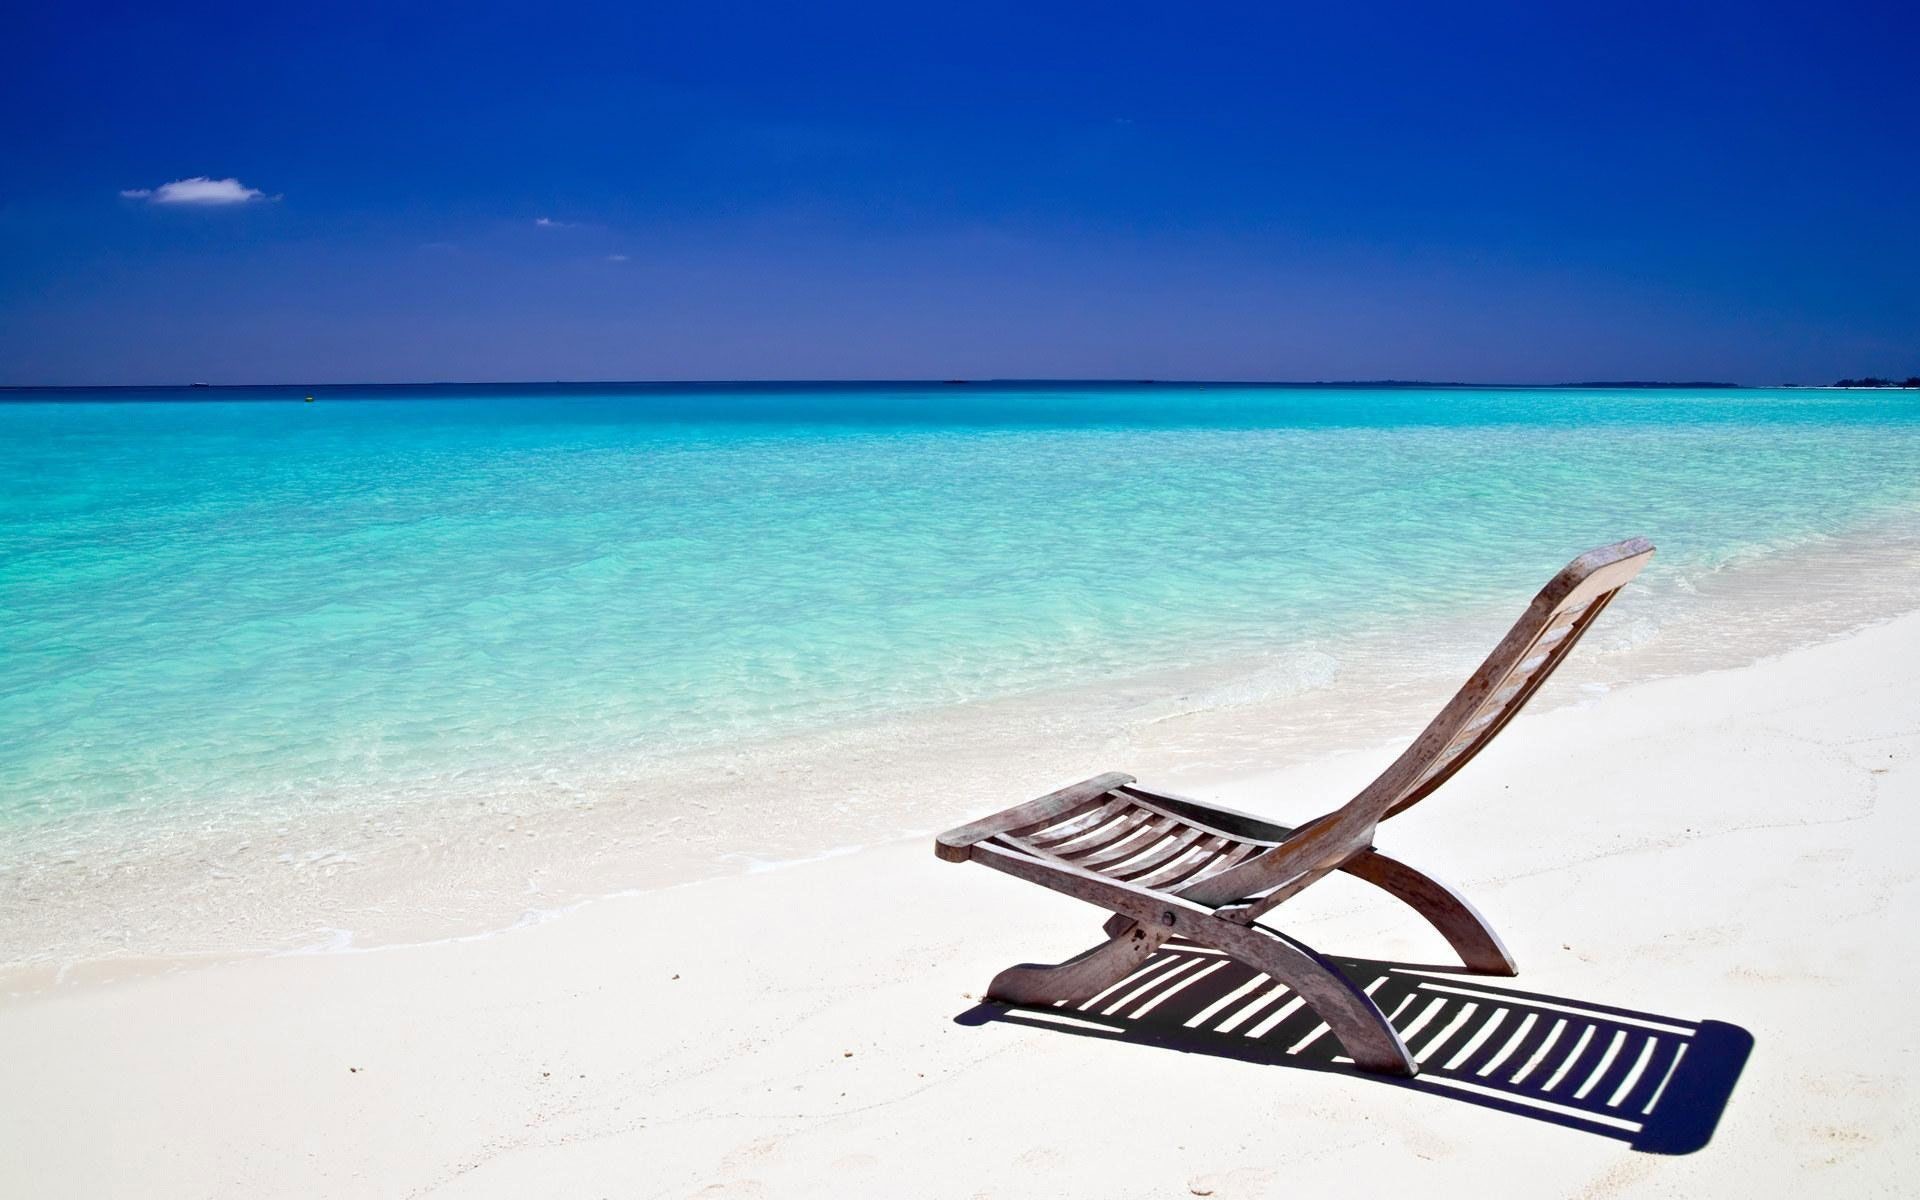 1920x1200 Umbrella beach chairs sun 1366x768 iwallhd wallpaper hd | Download Wallpaper  | Pinterest | Beach chairs and Wallpaper